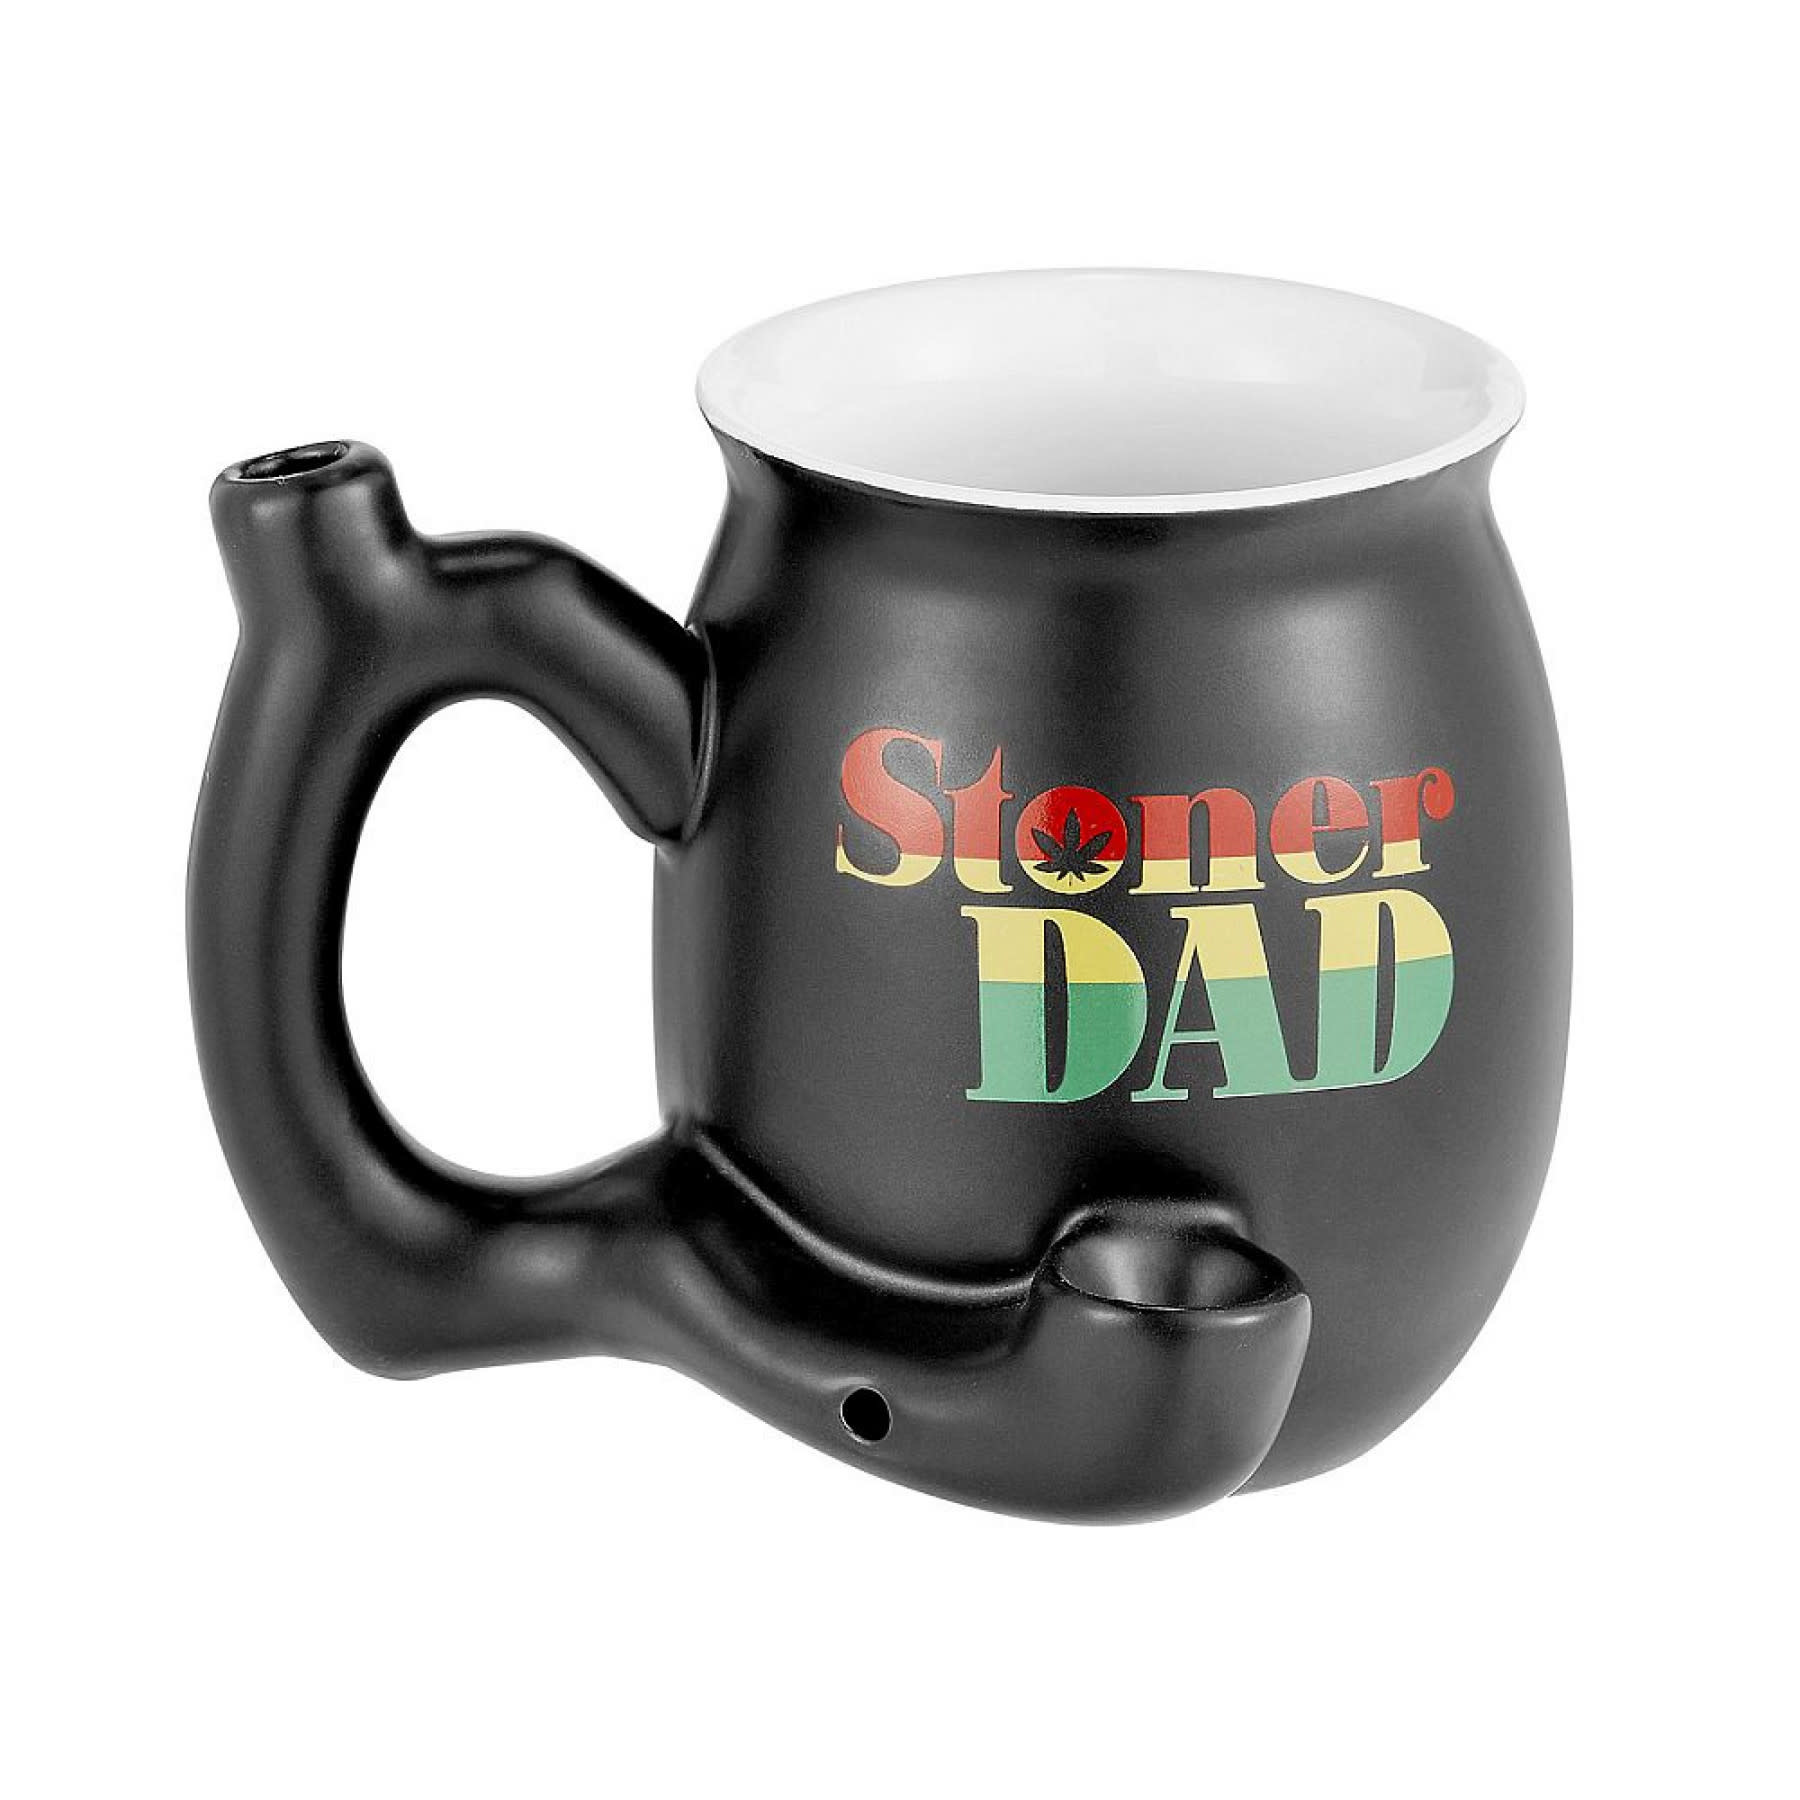 West Coast Gifts Ceramic Stoner Dad Mug Pipe - Black w/ Rasta Font